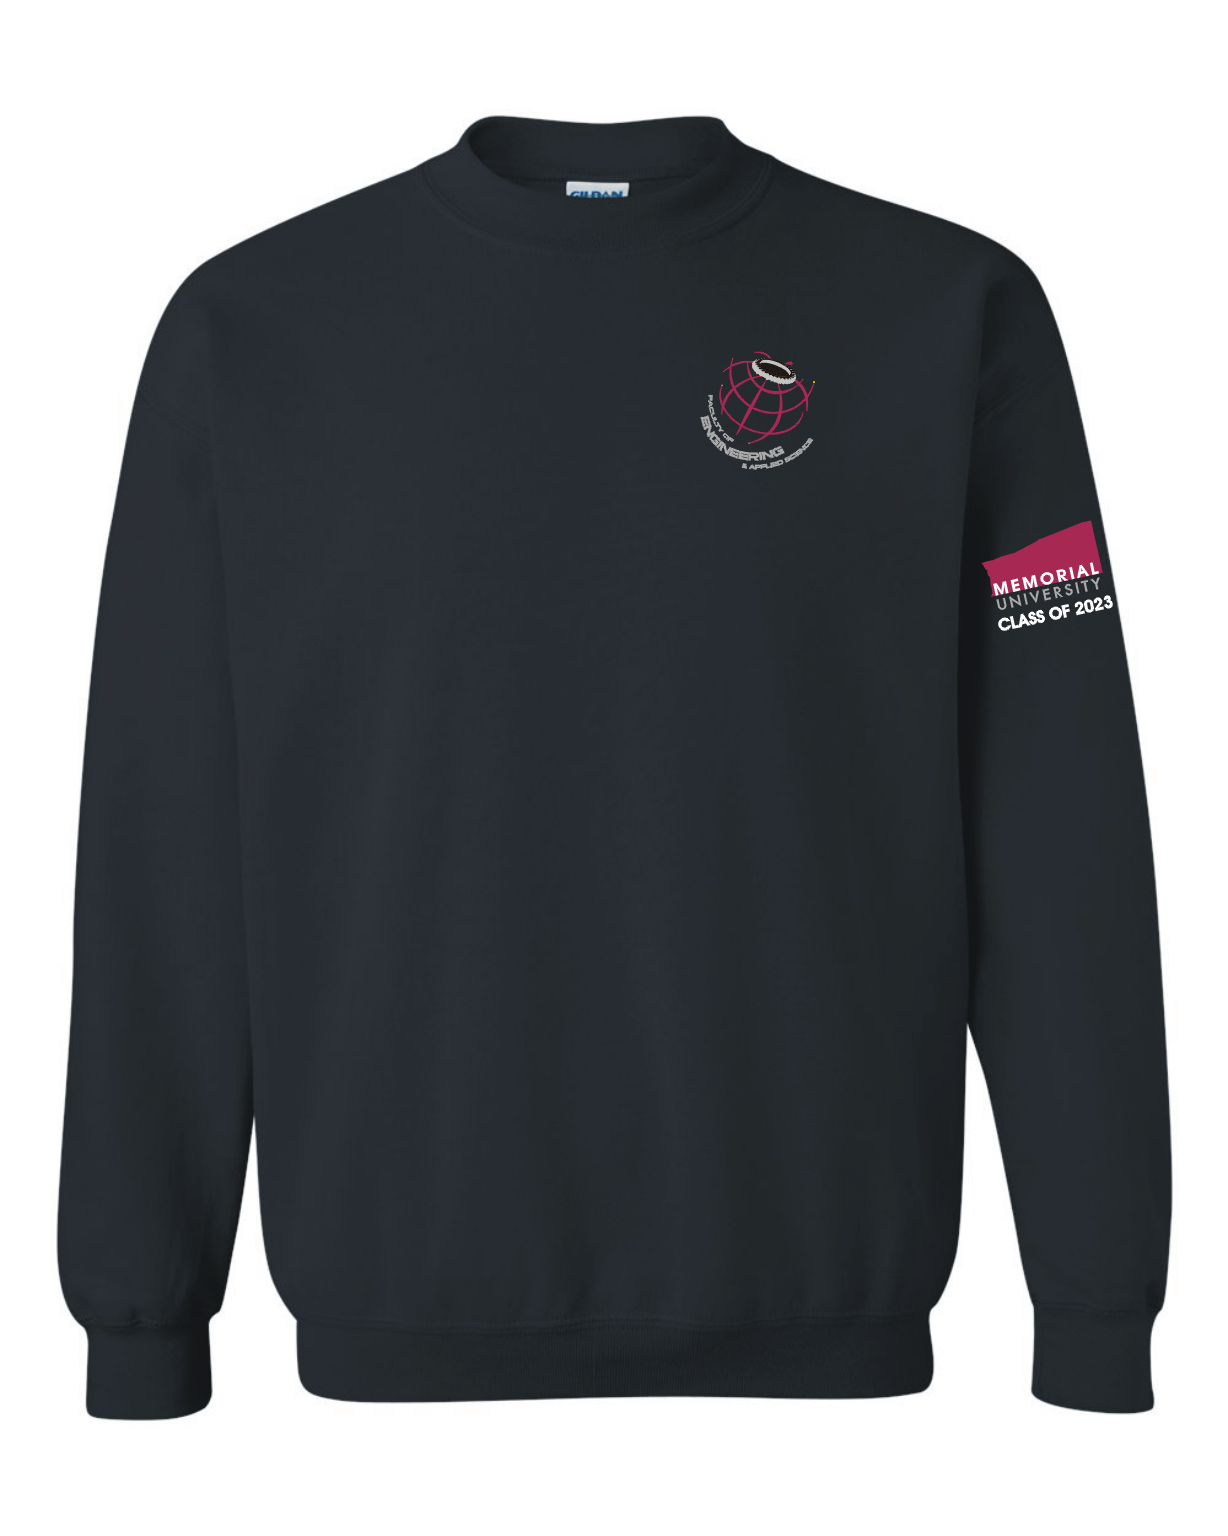 Mun Engineering Class of 2023 - Embroidered Crewneck Sweatshirt